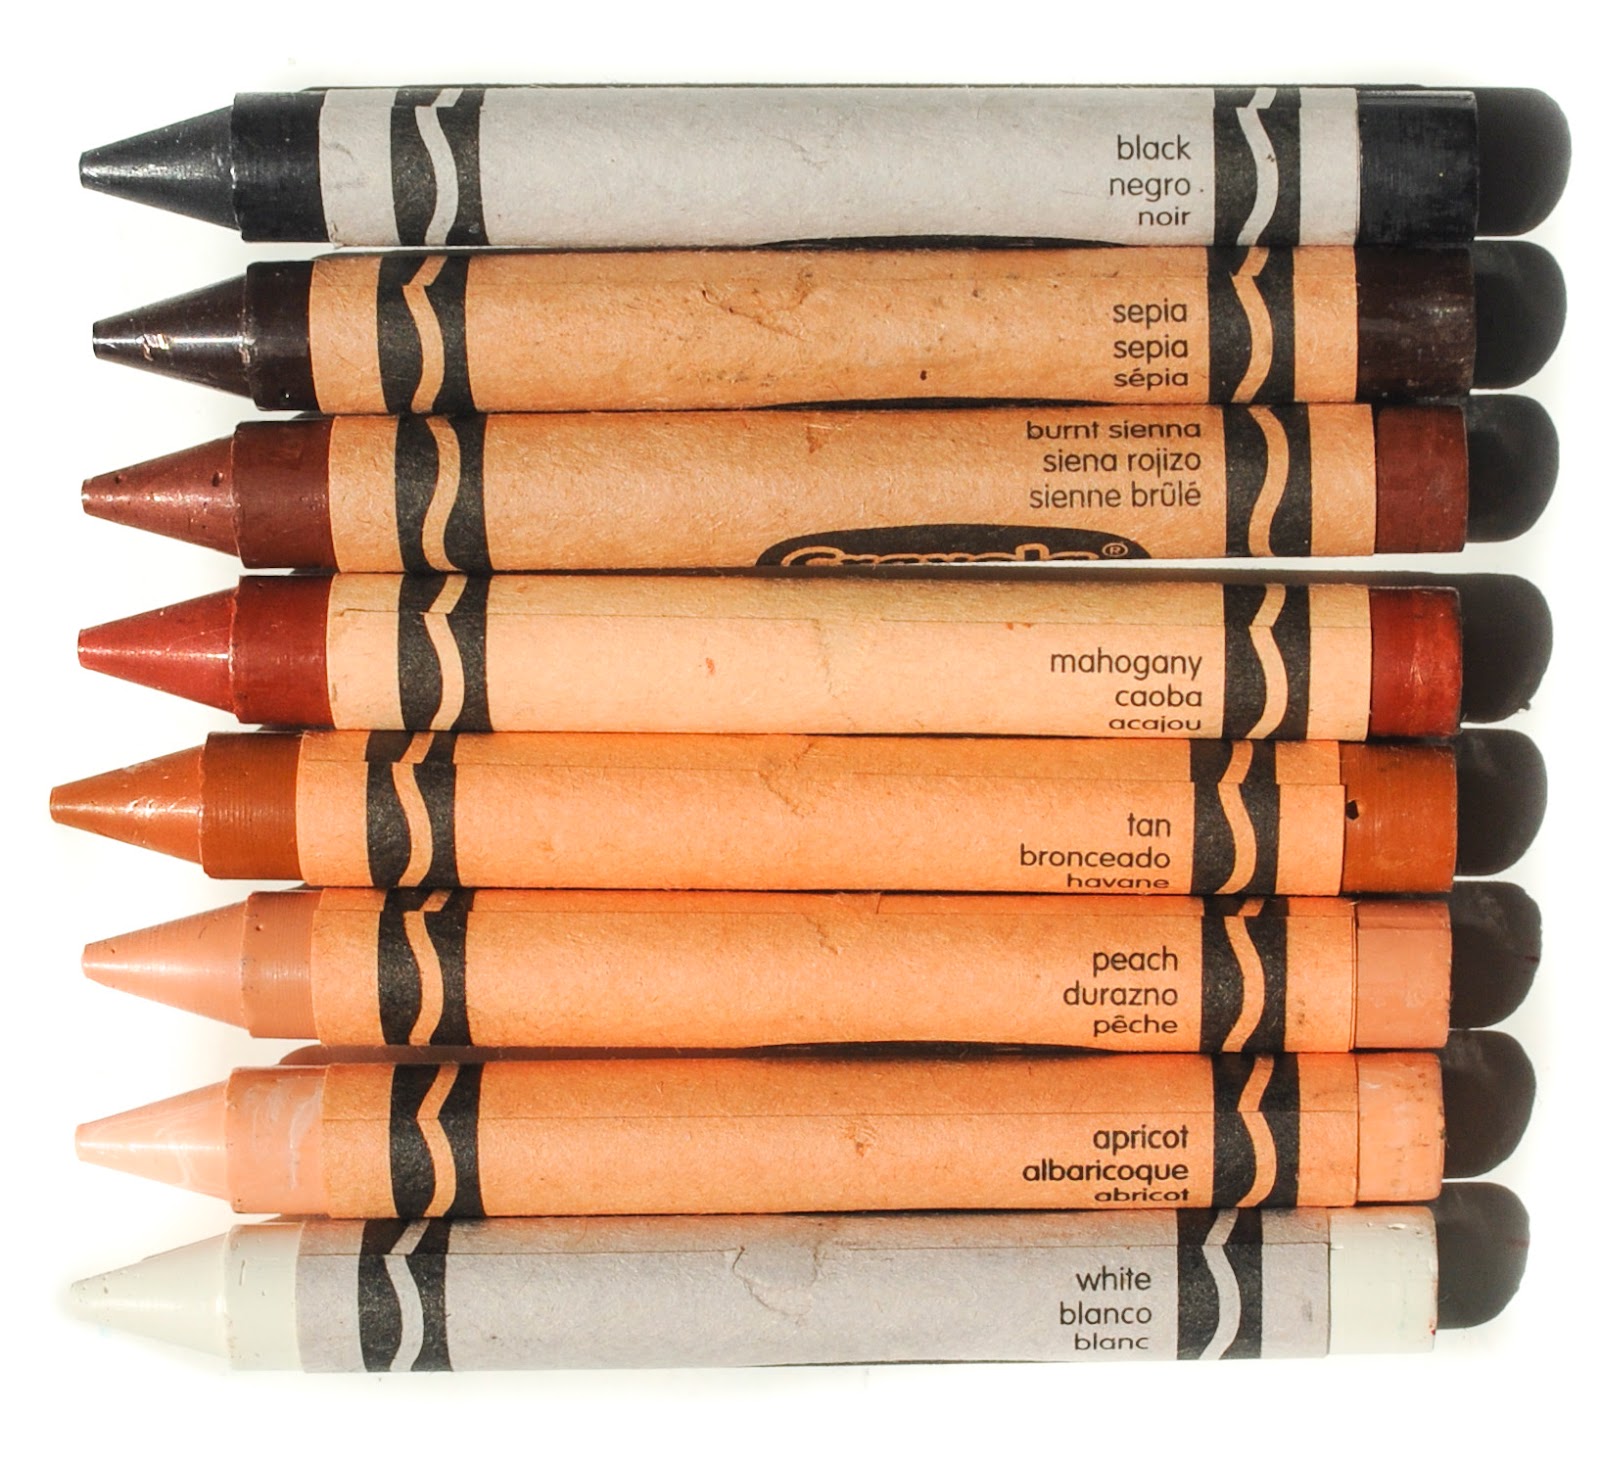 Crayola Multicultural Crayons, 8 Skin Tone Colors/Box